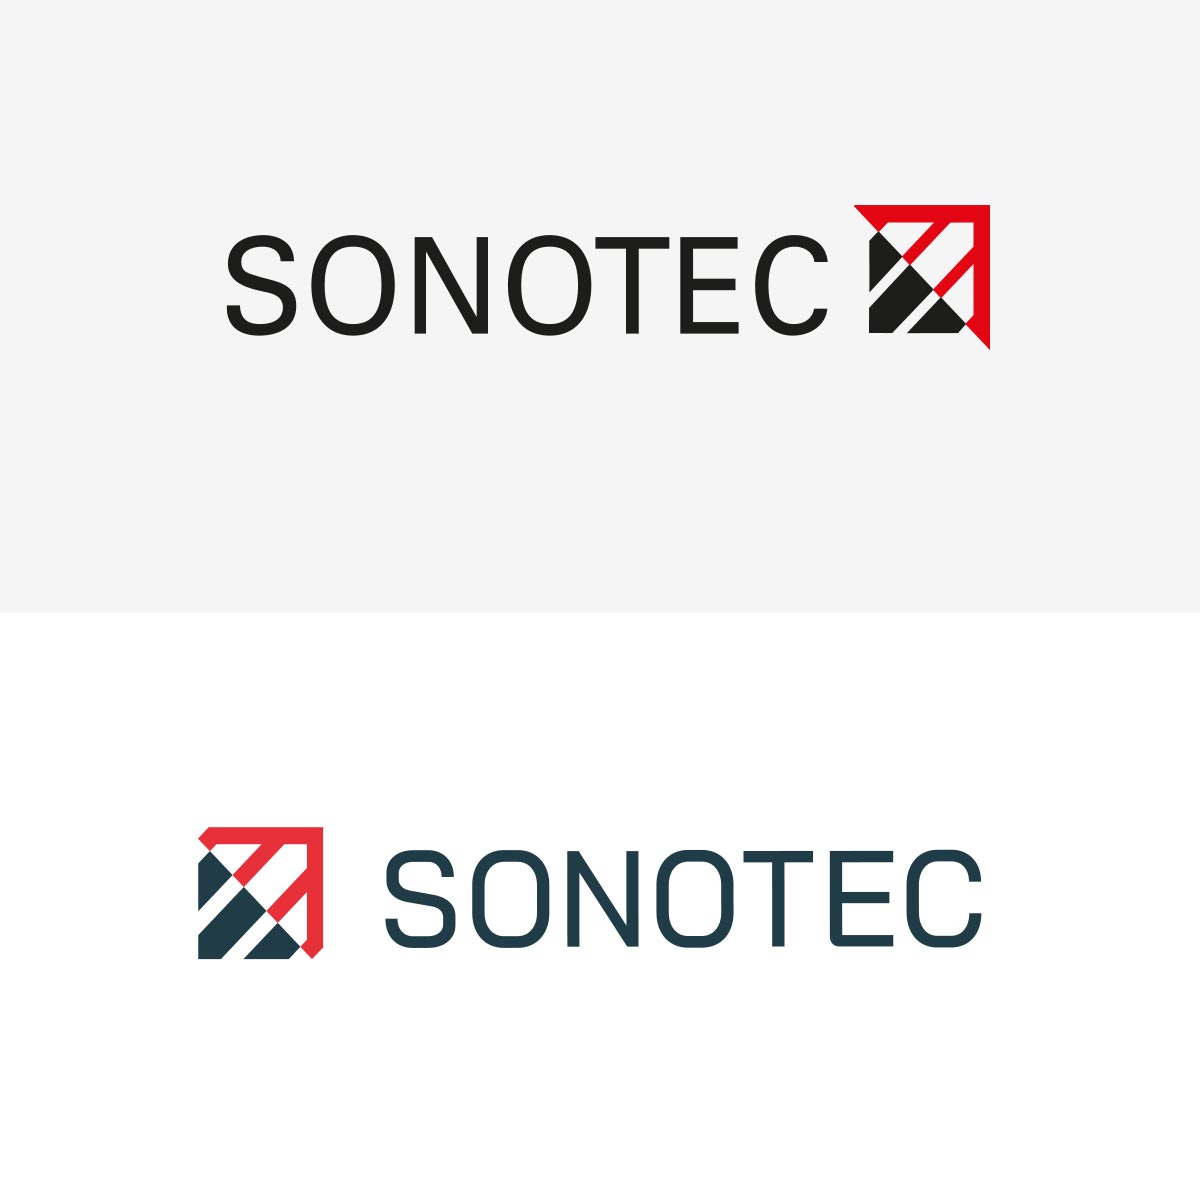 Sonotec: Rebranding